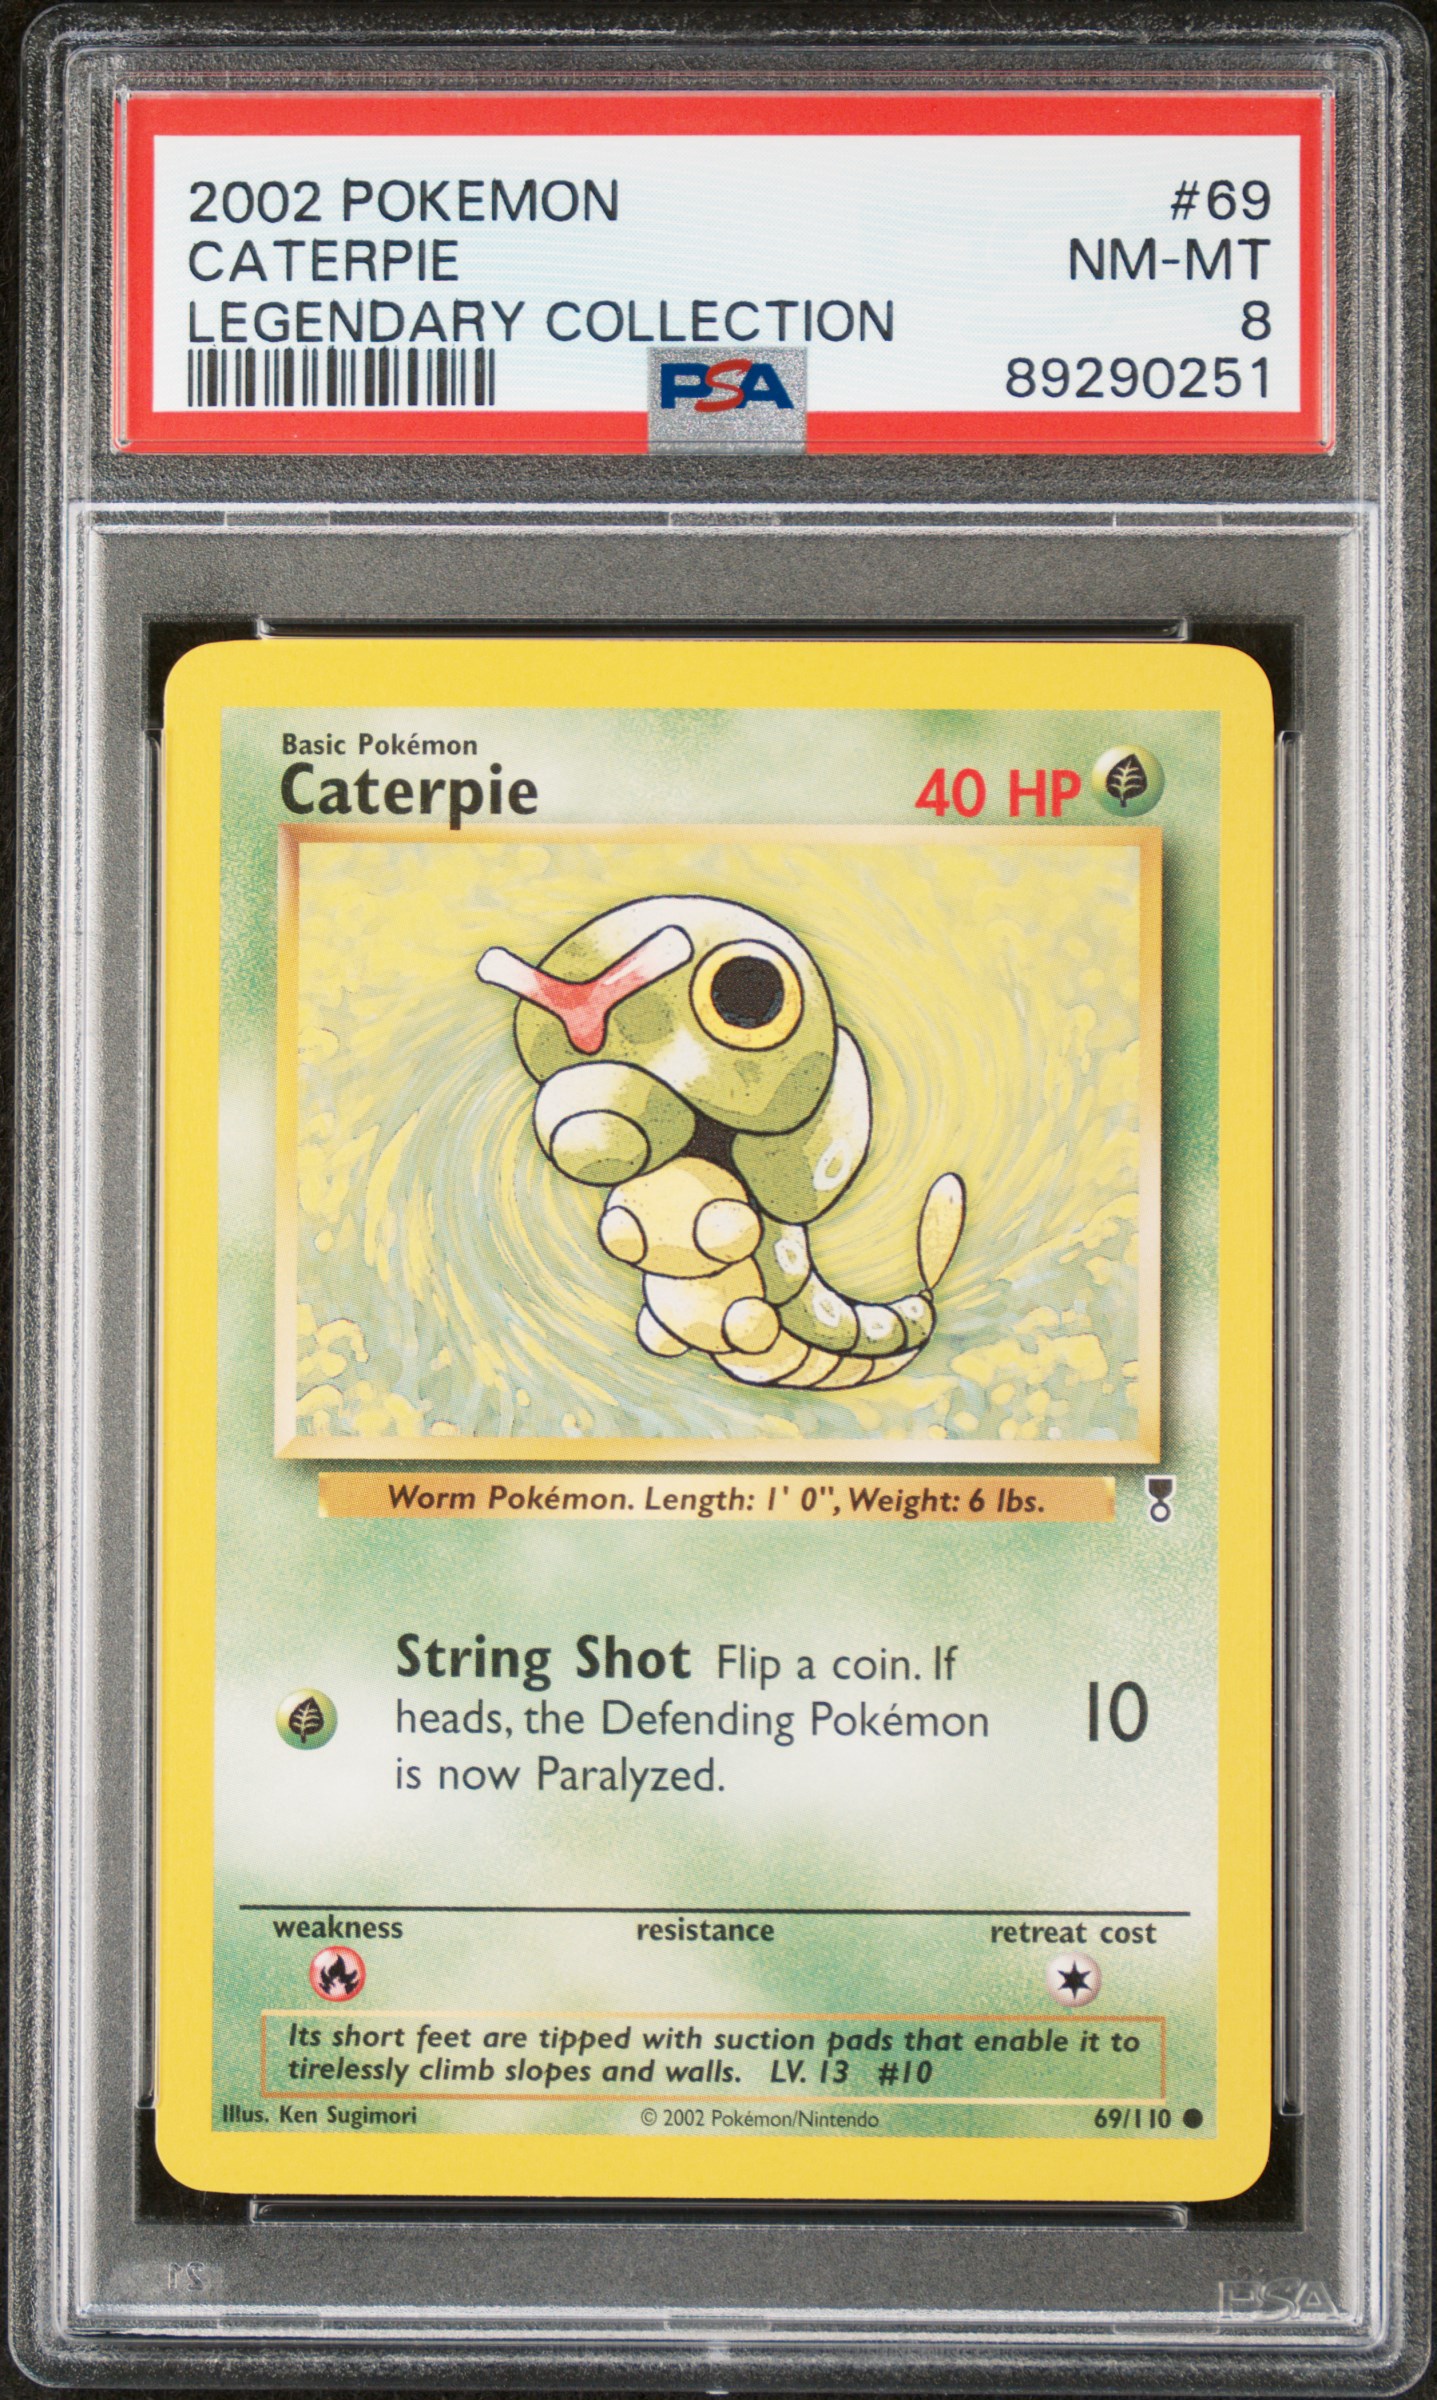 2002 Pokemon Legendary Collection 69 Caterpie – PSA NM-MT 8